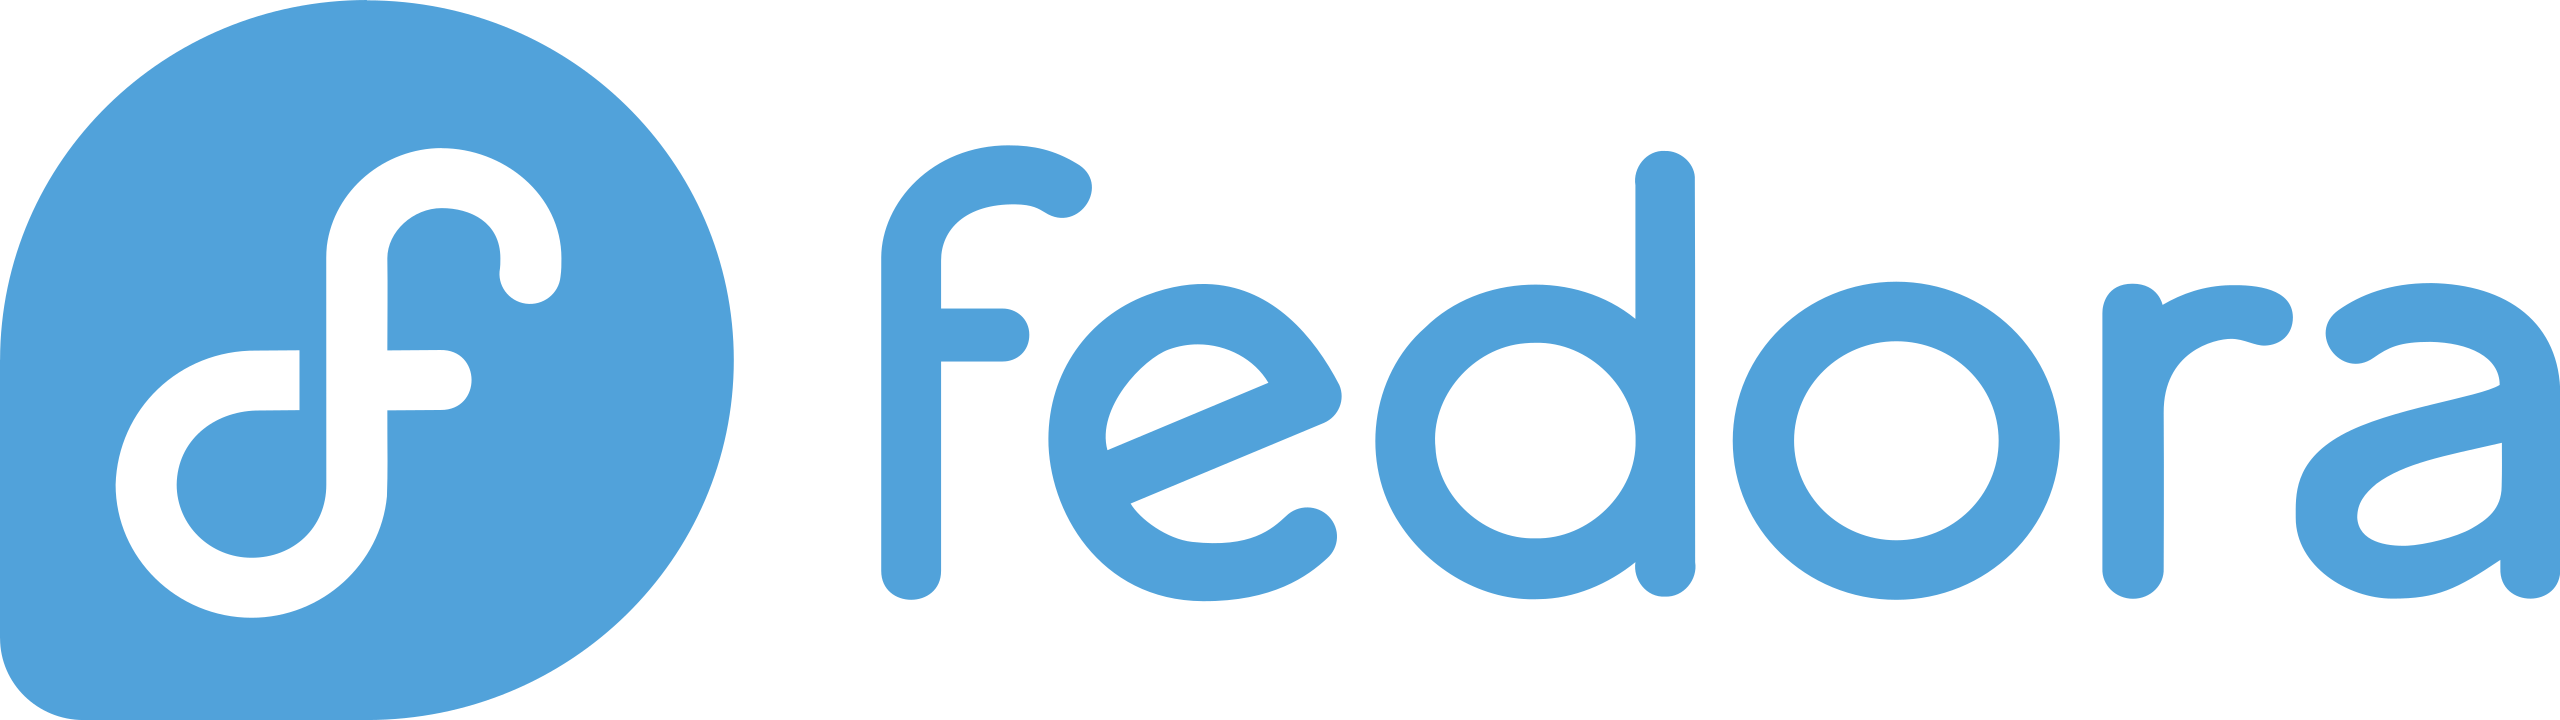 fedora-logo-alpha.png